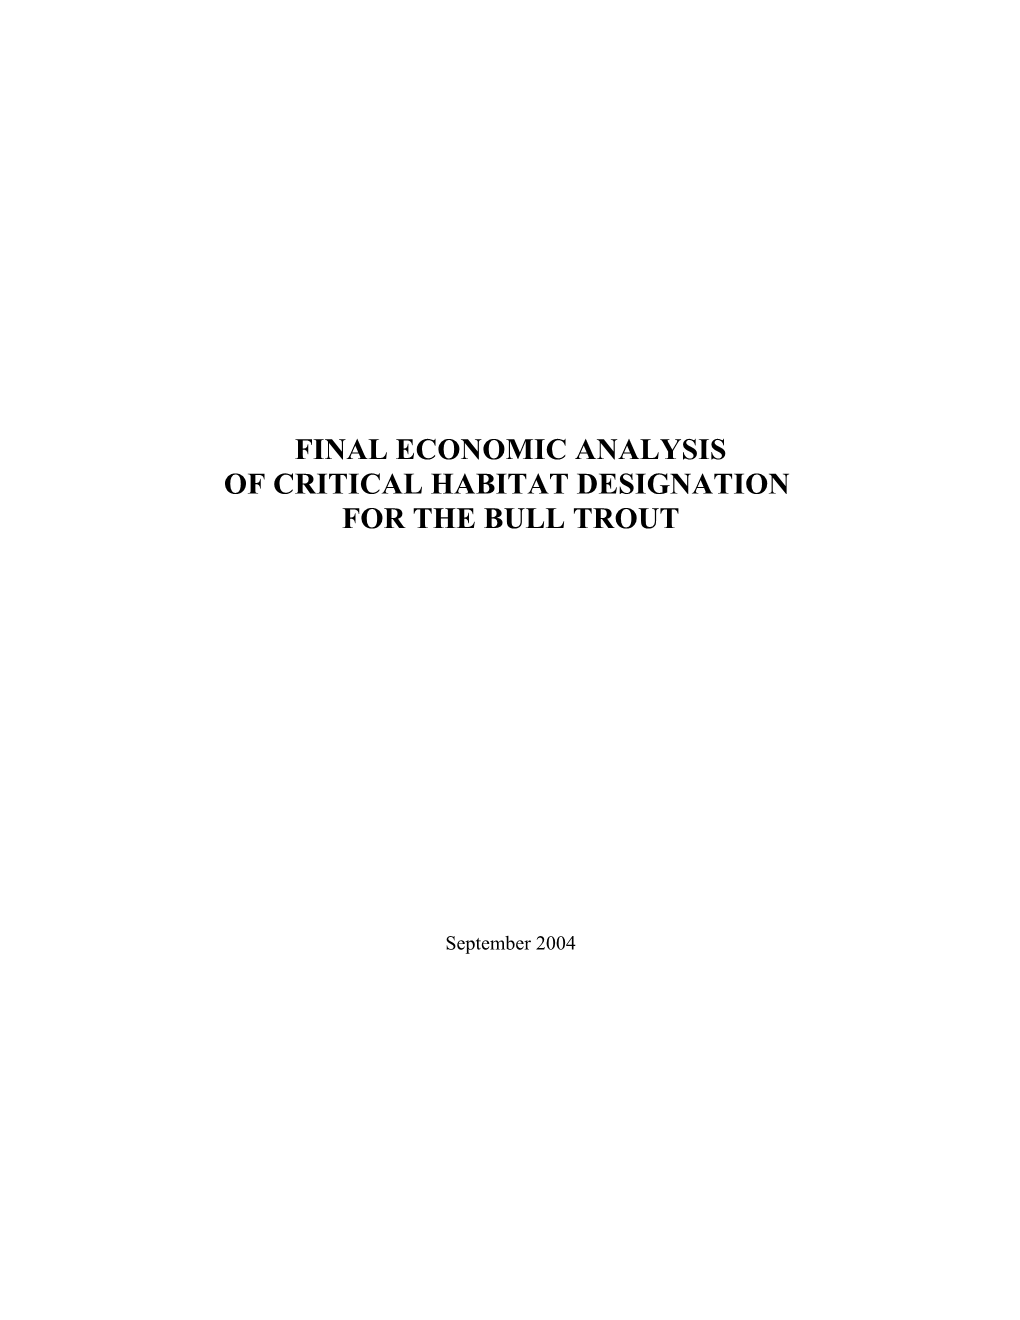 Final Economic Analysis of Critical Habitat Designation for the Bull Trout